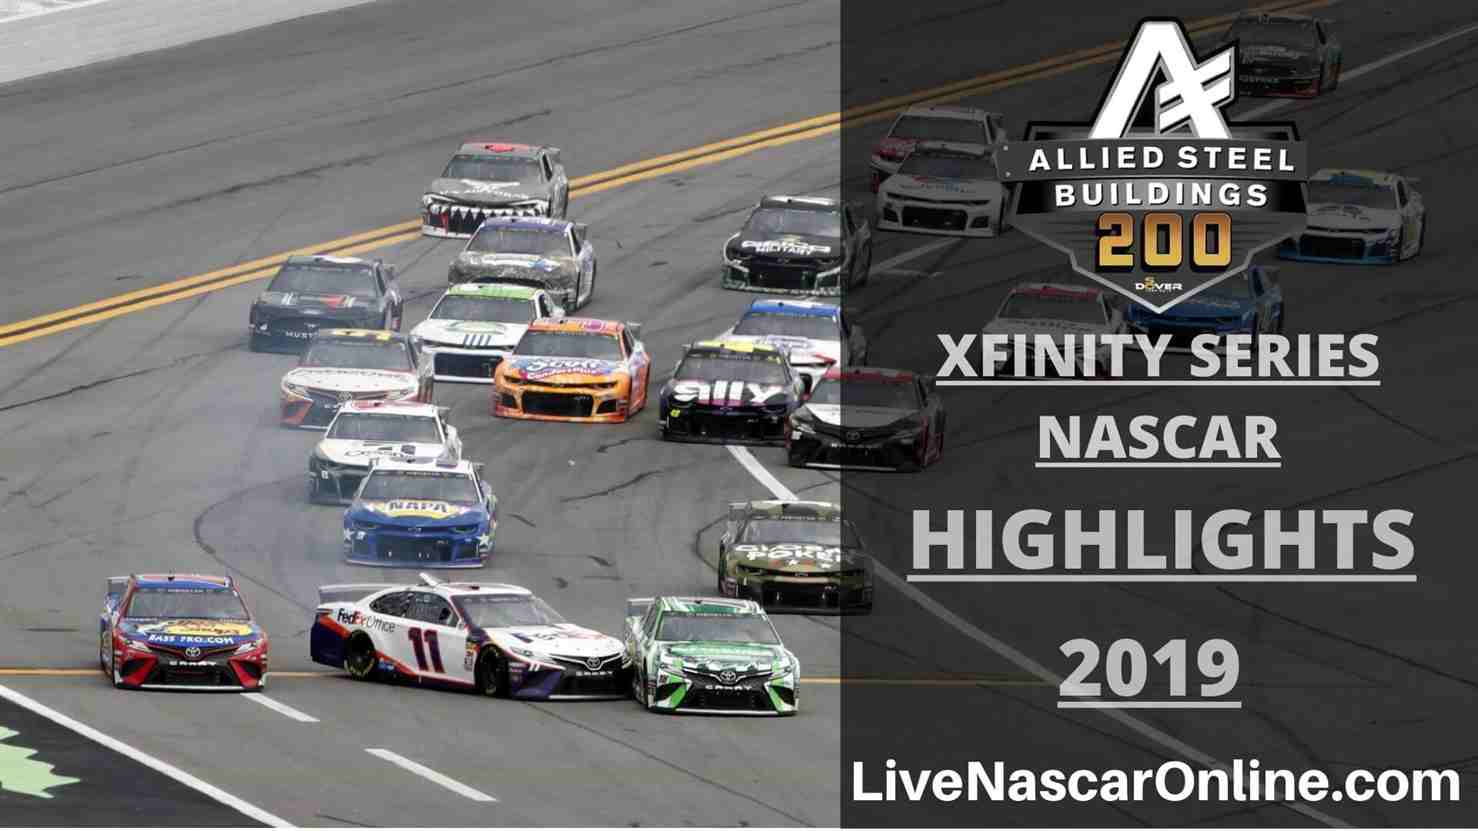 NASCAR Xfinity Series Allied Steel Buildings 200 Highlights 2019